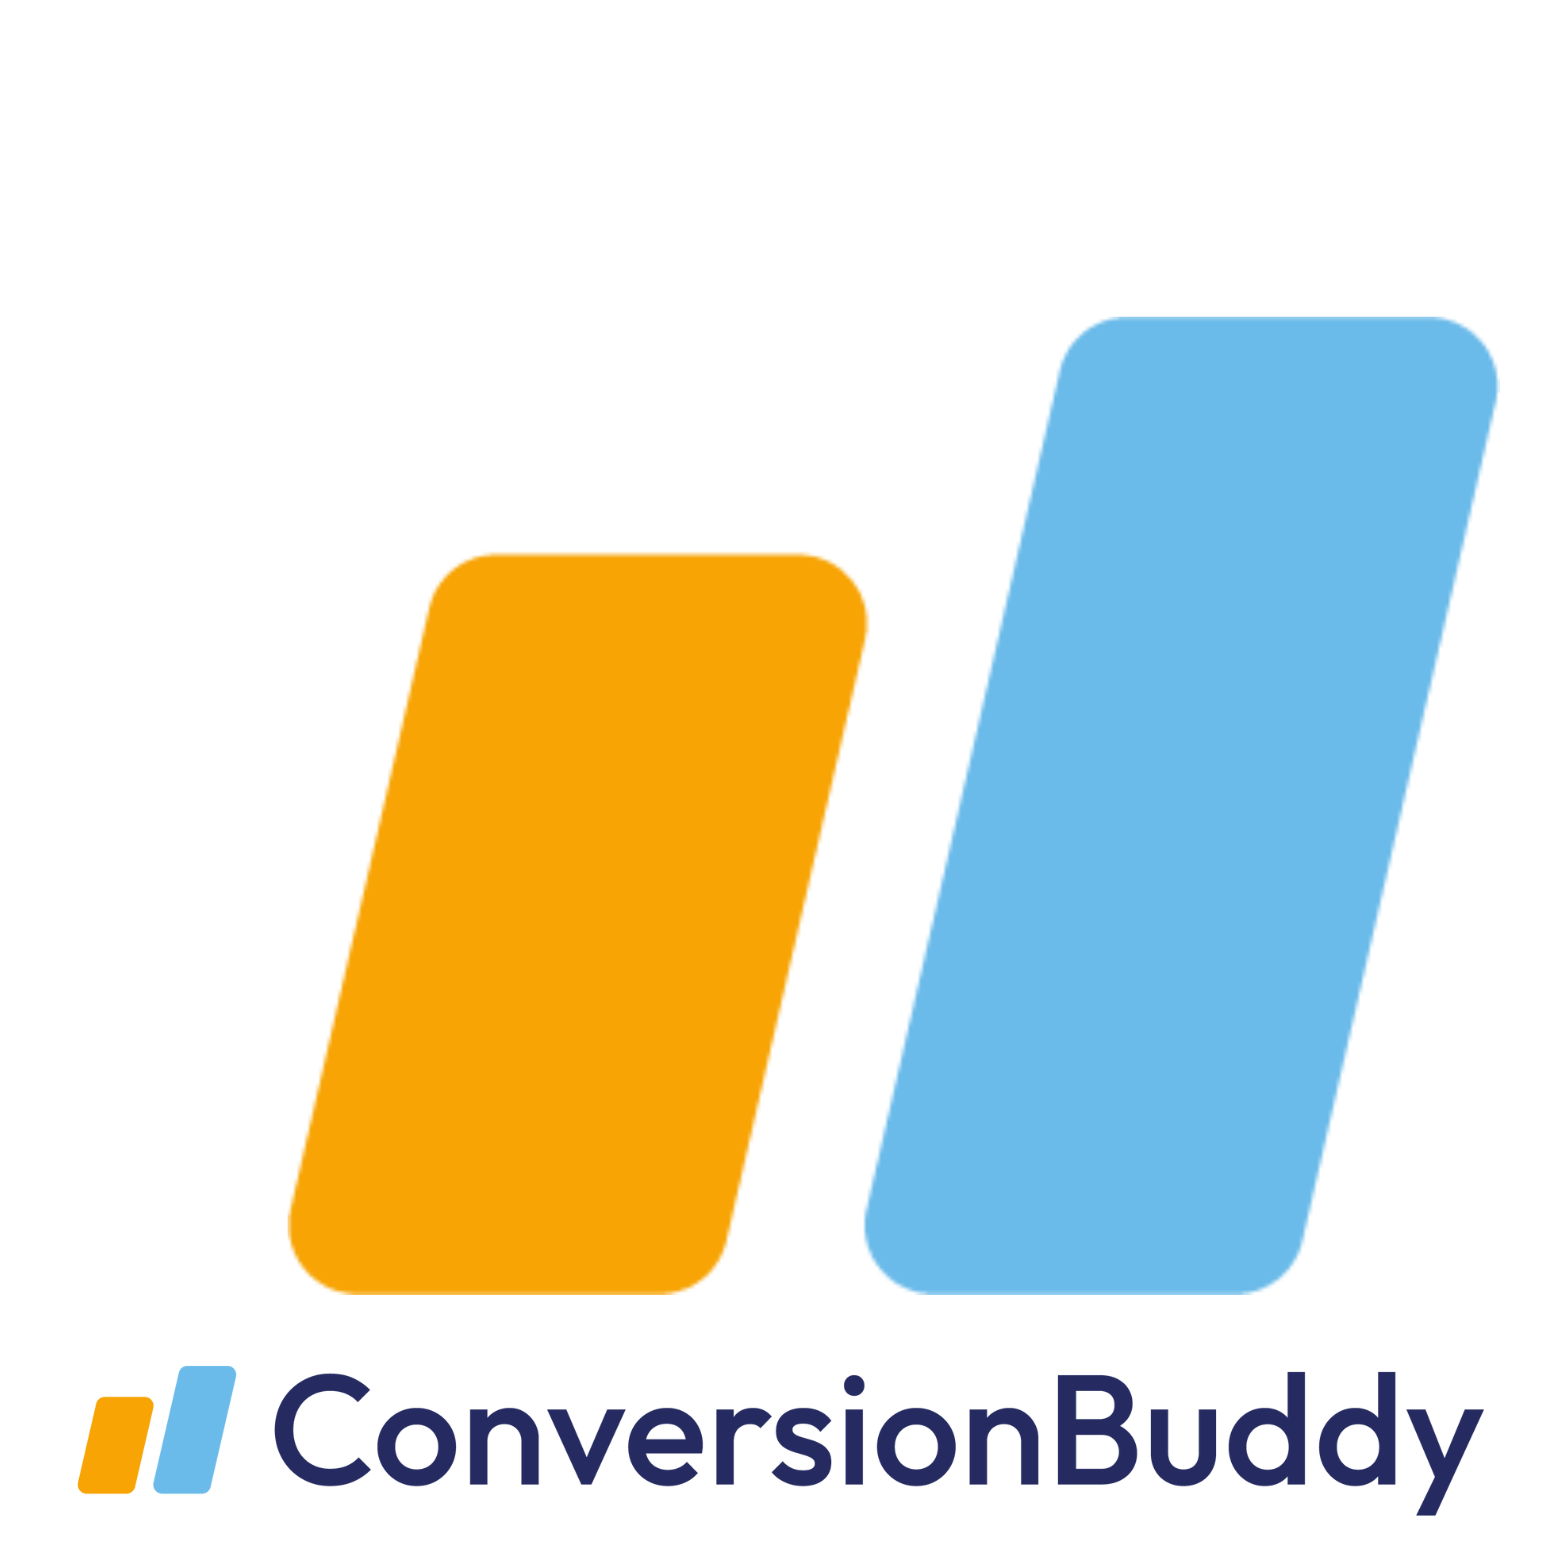 ConversionBuddy